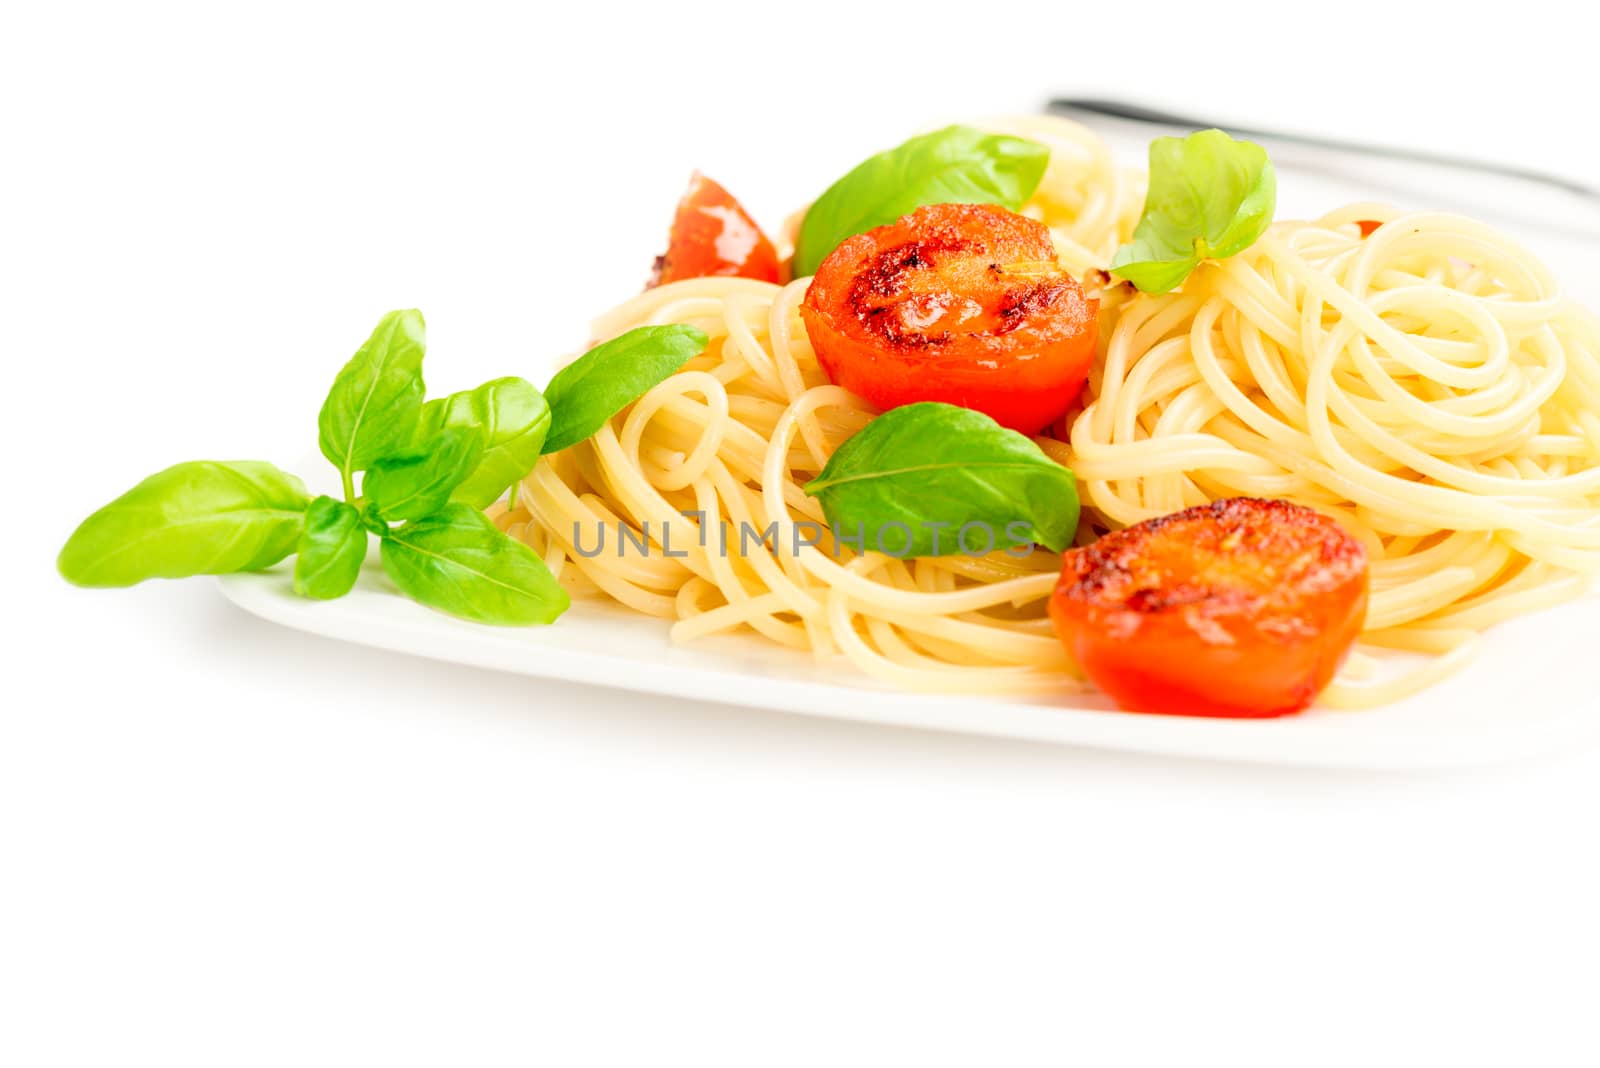 Traditional italian macaroni pasta with grilled tomato and oregano